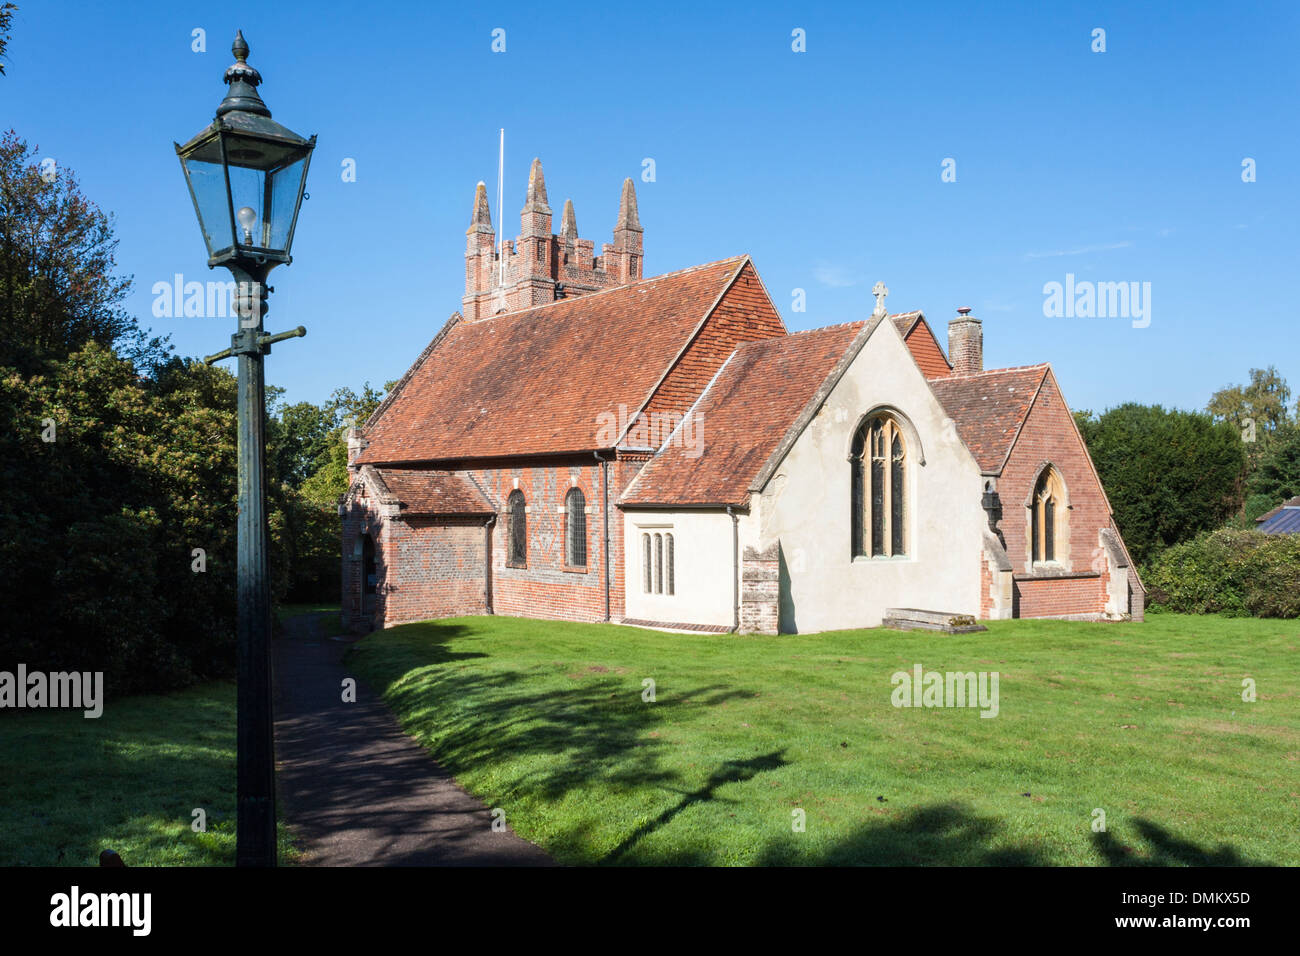 St Mary's Church, Eversley, Hampshire, England, GB, UK. Stock Photo